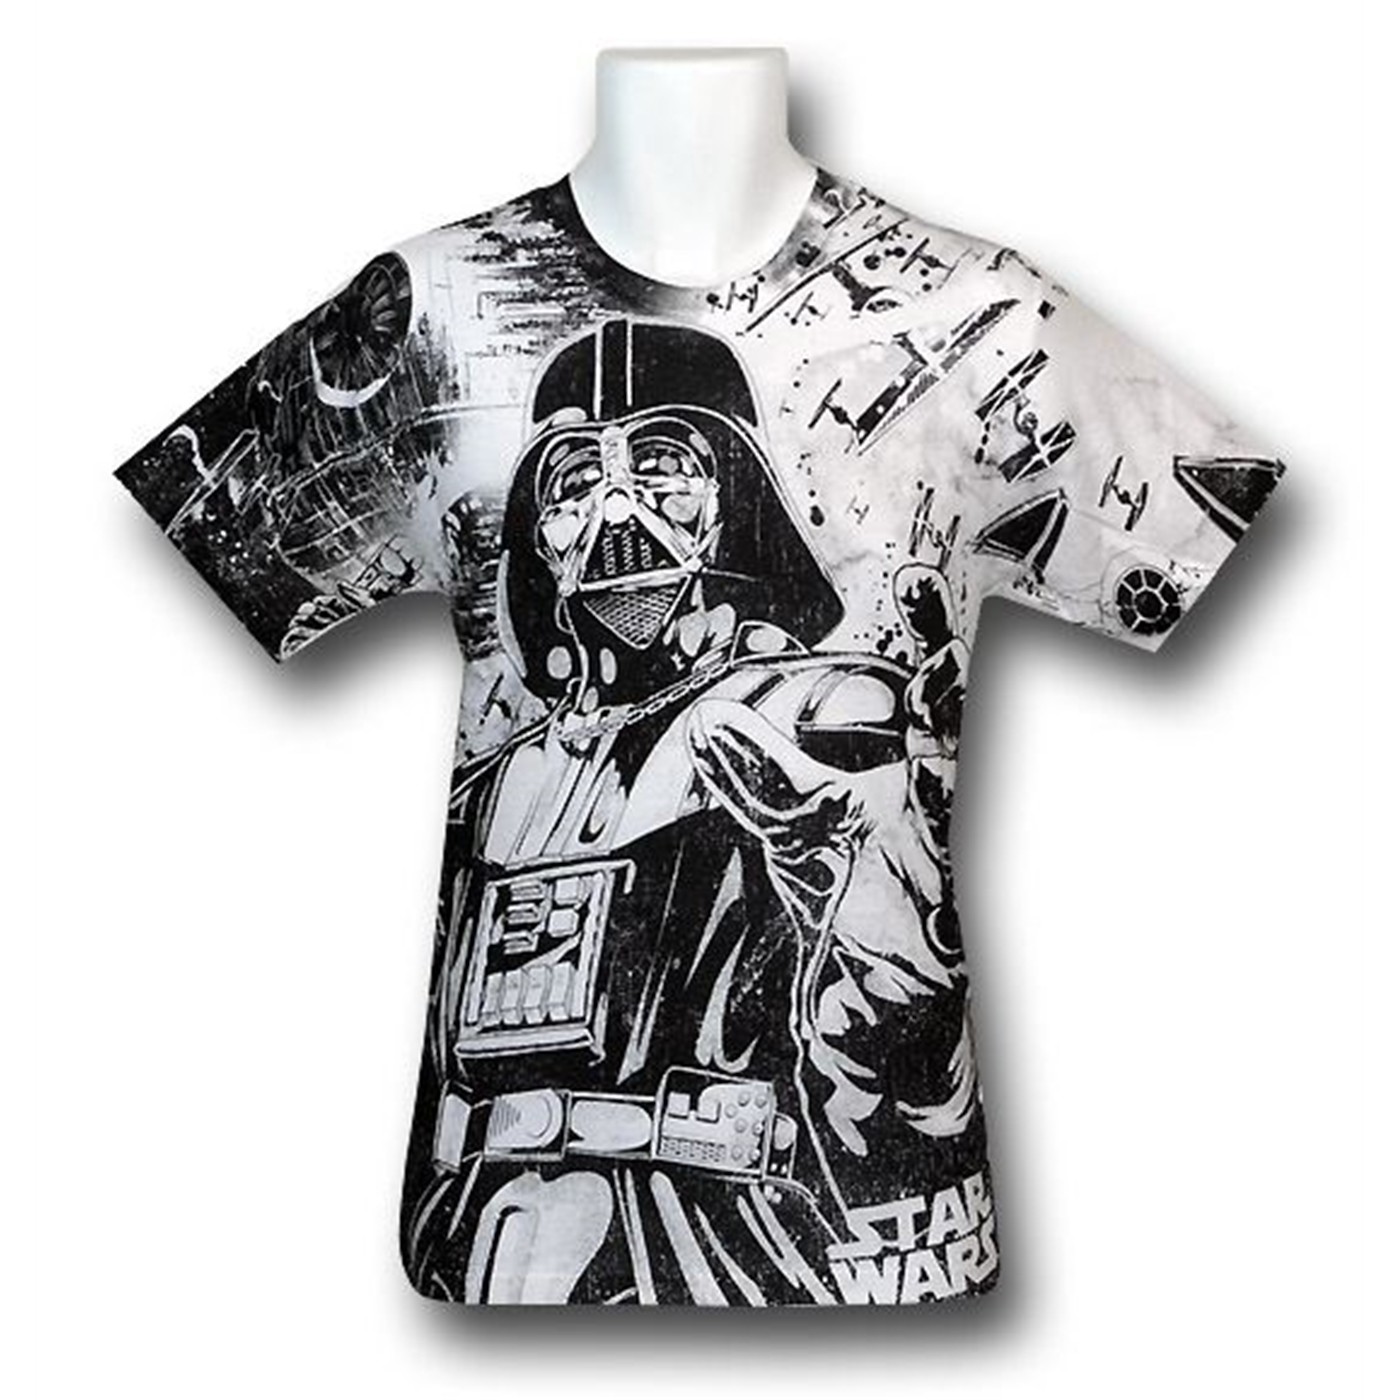 Darth Vader All Over Print 30 Single T-Shirt